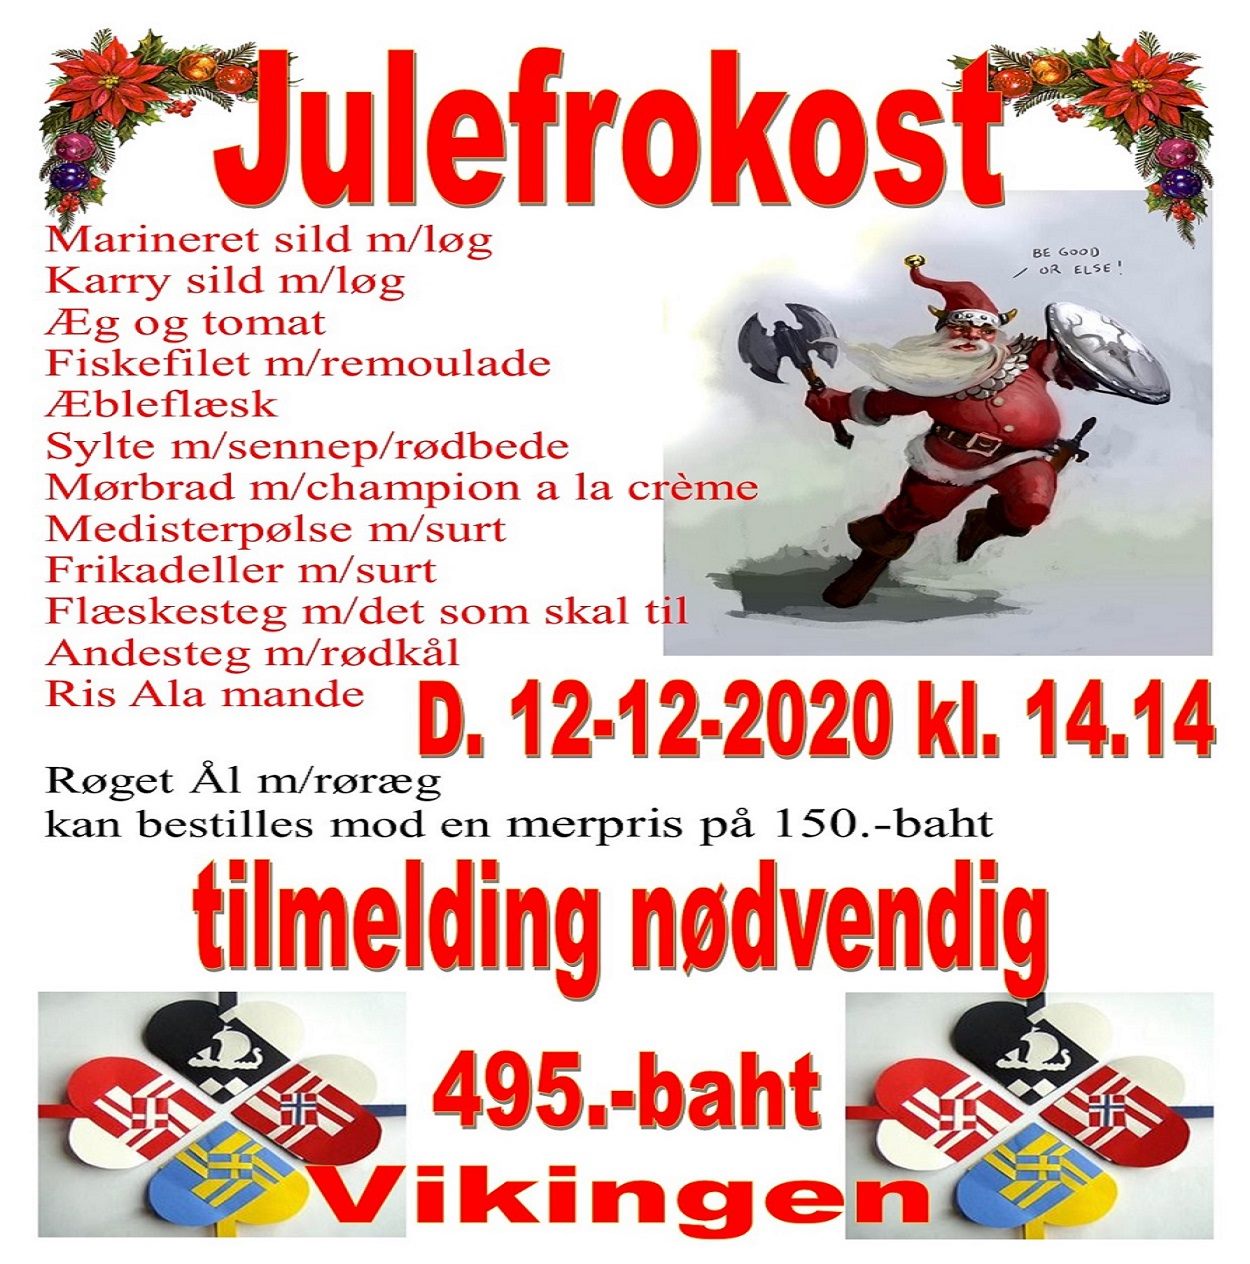 www.thai-dk.dk/uploads/viking kata julefrokost 2020.jpg